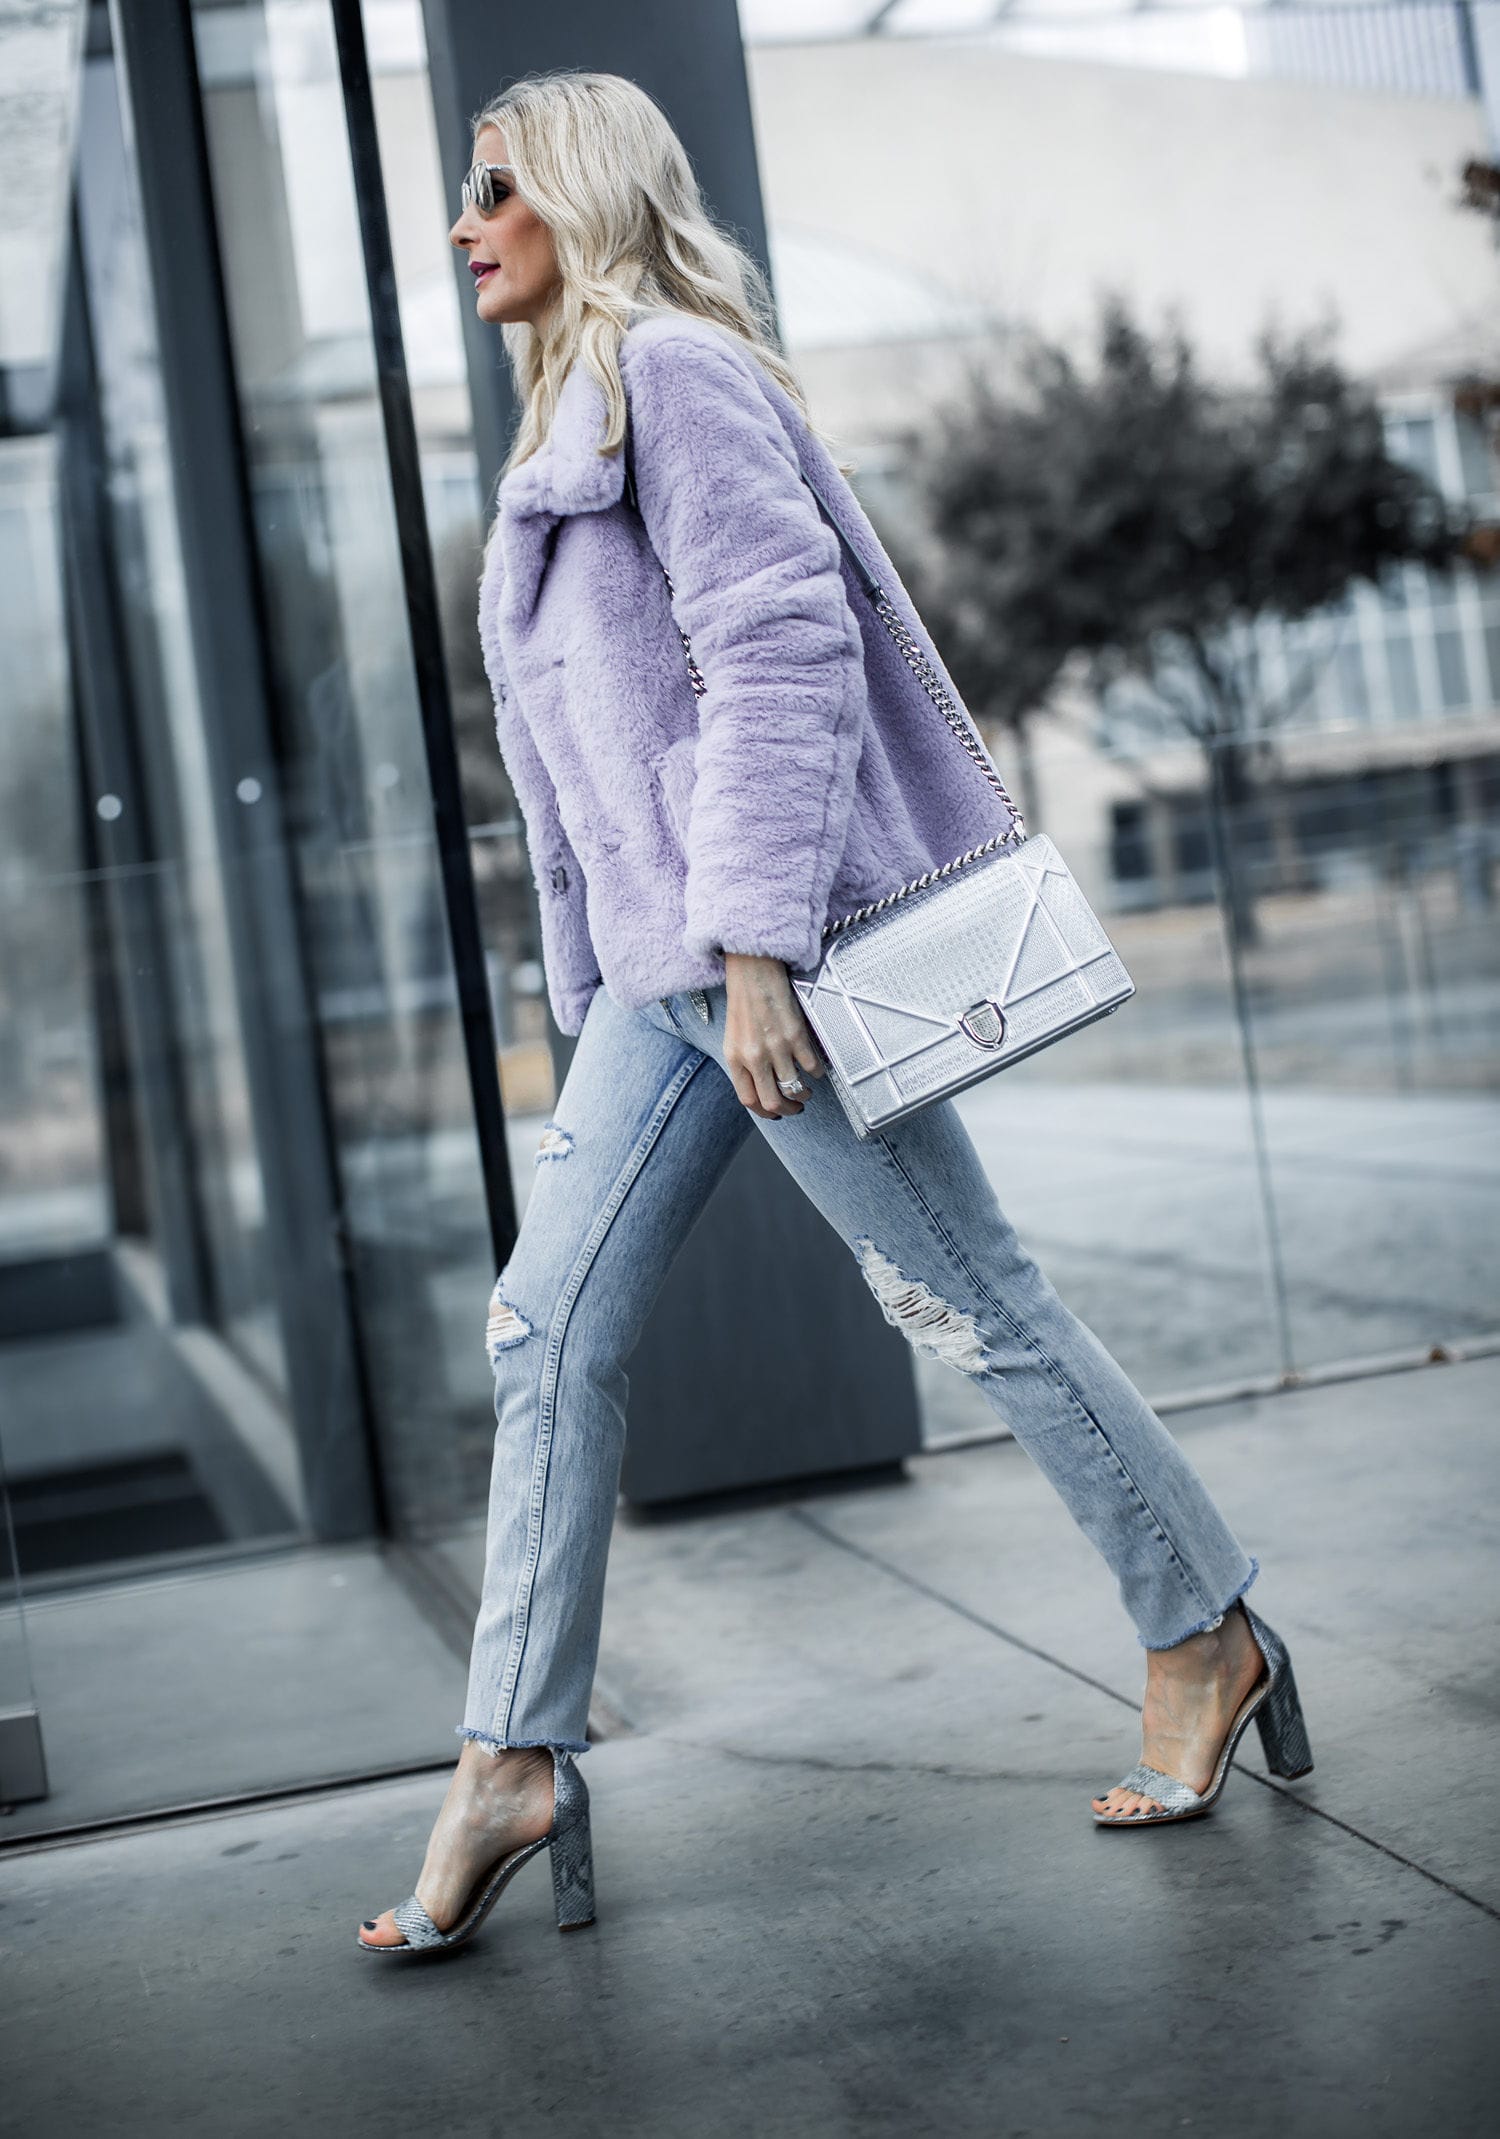 Dallas fashion blogger wearing teddy coat and snake print heels 